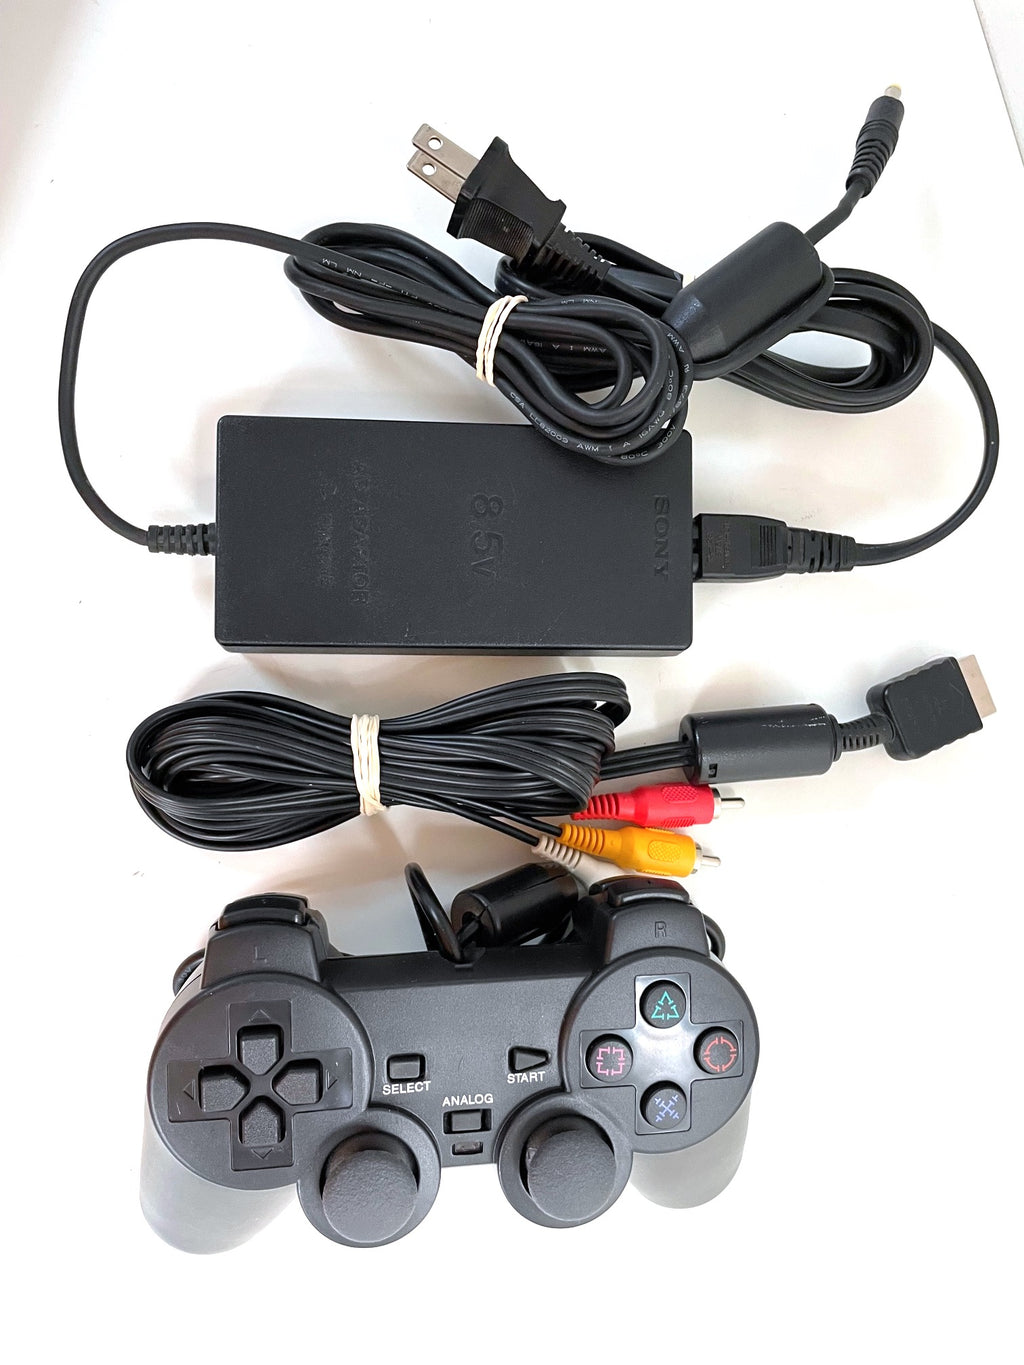 Control Playstation 2 Ps2 Con Cable